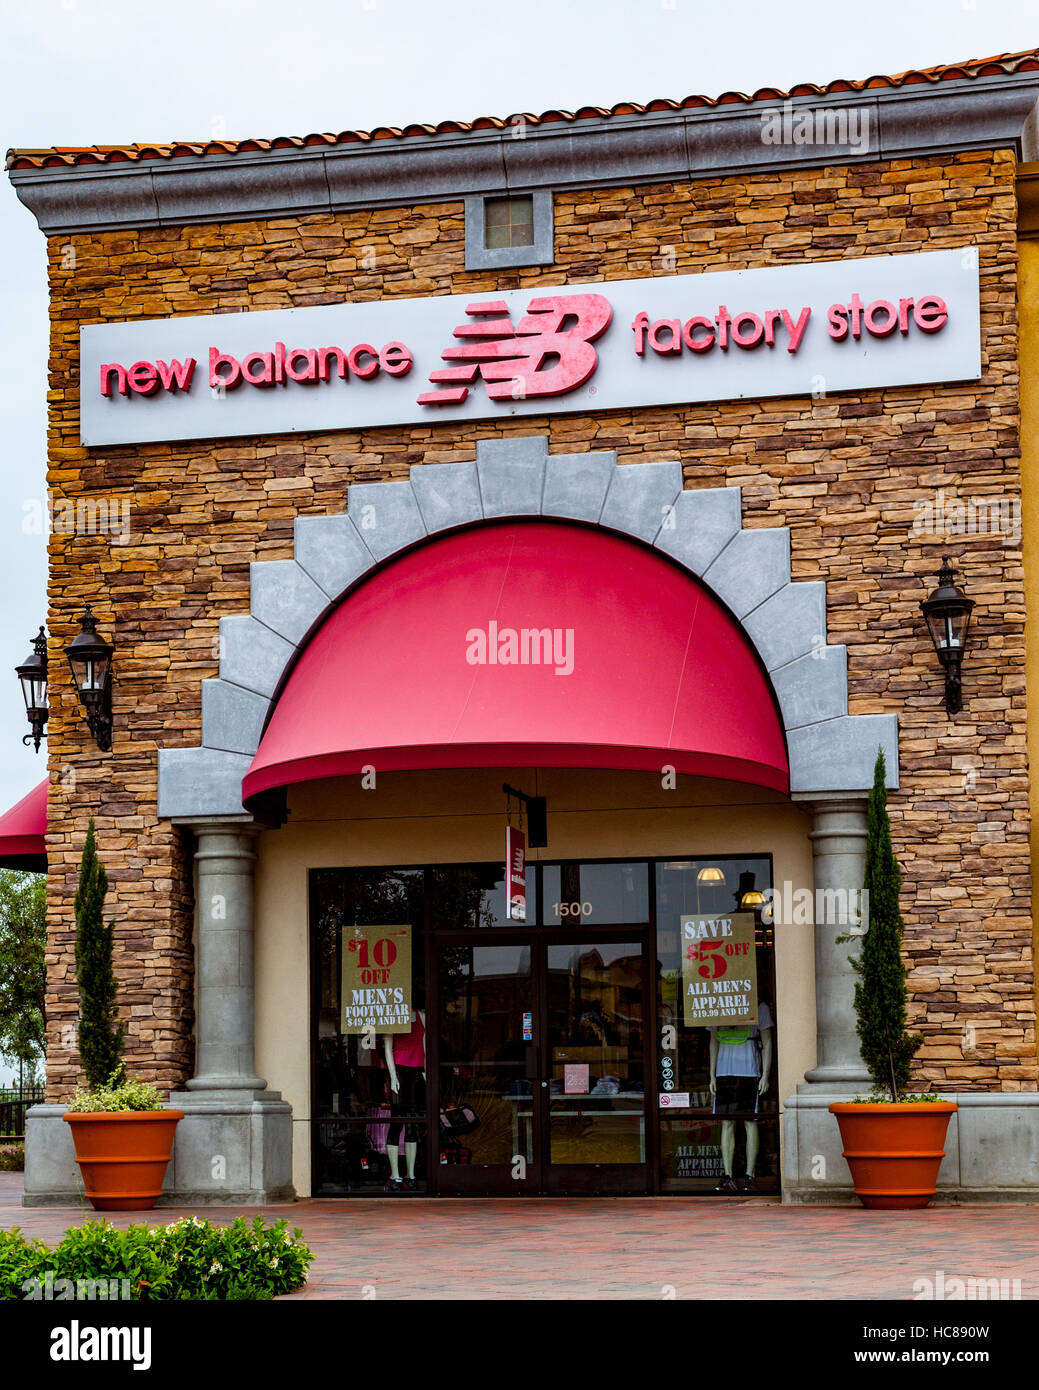 A New Balance Factory Store in Camarillo California USA Stock Photo - Alamy